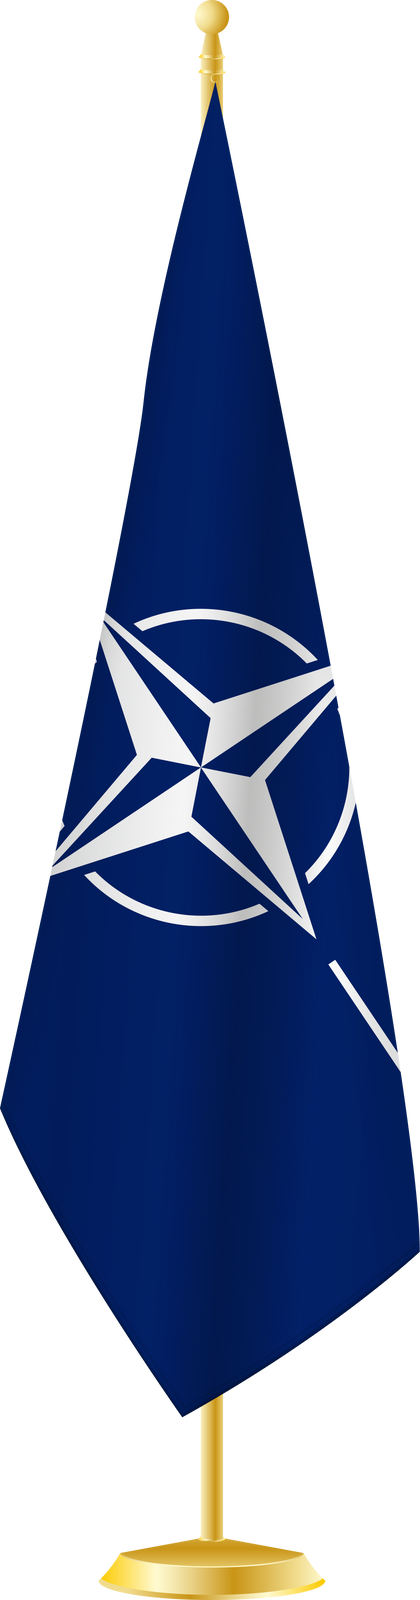 Nato flag on a flag stand.